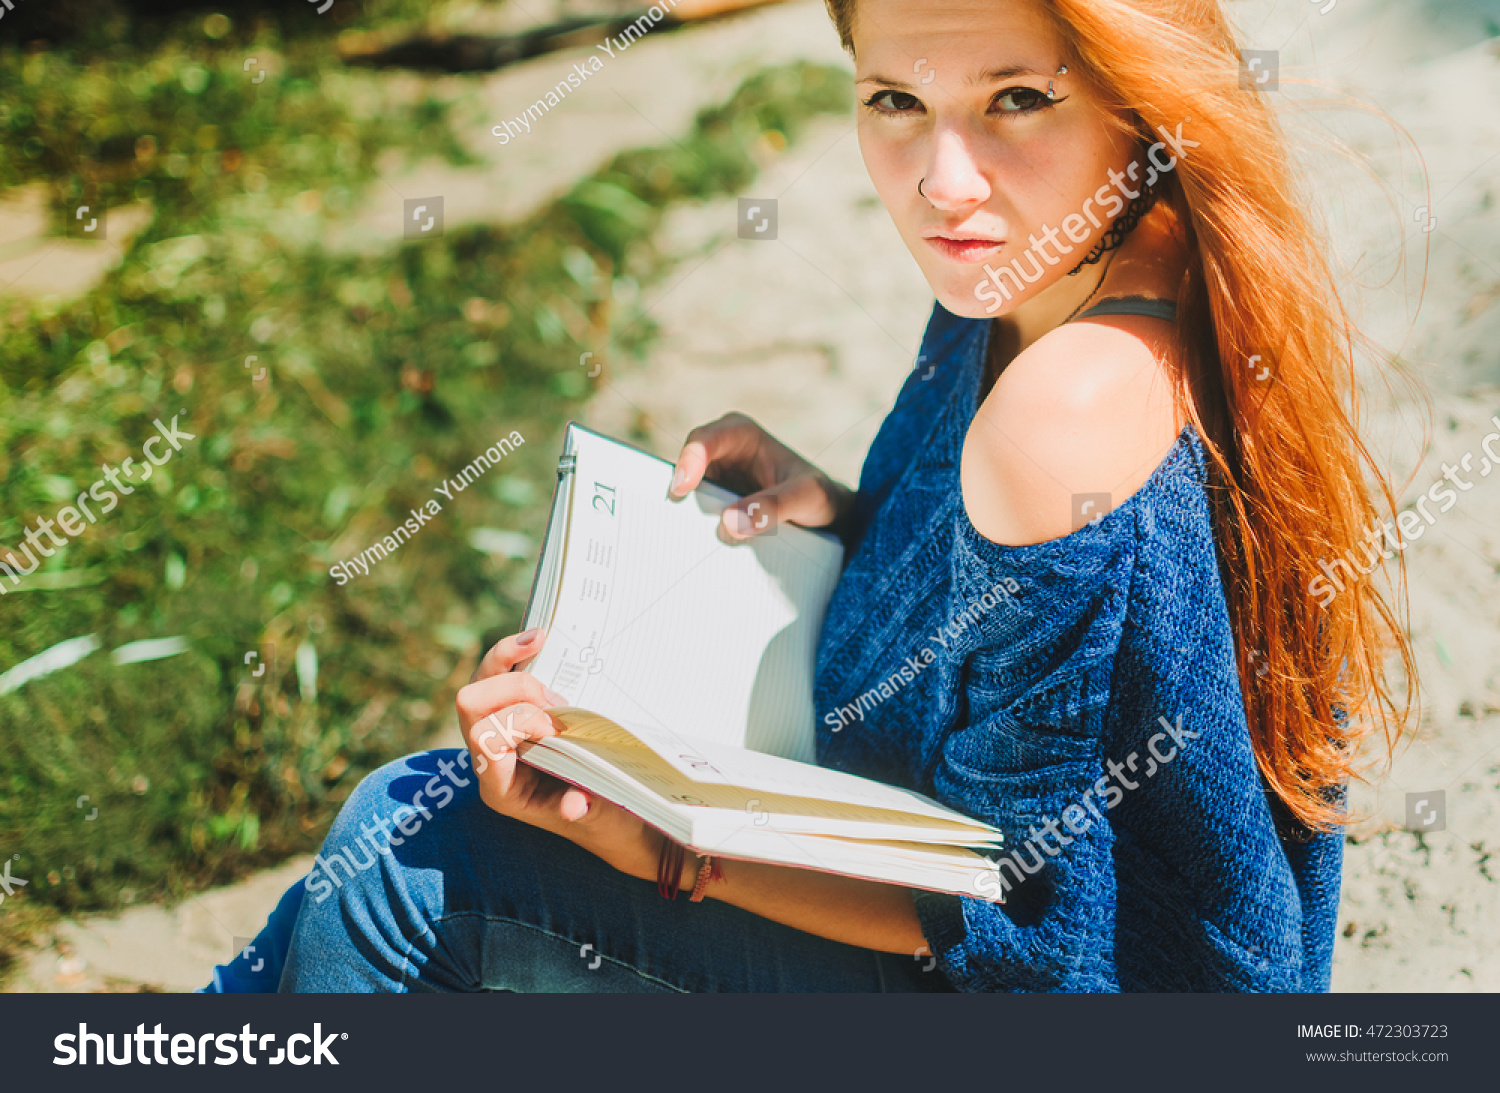 Teen Girl On Seashore Reading Book Stock Photo 472303723 ...